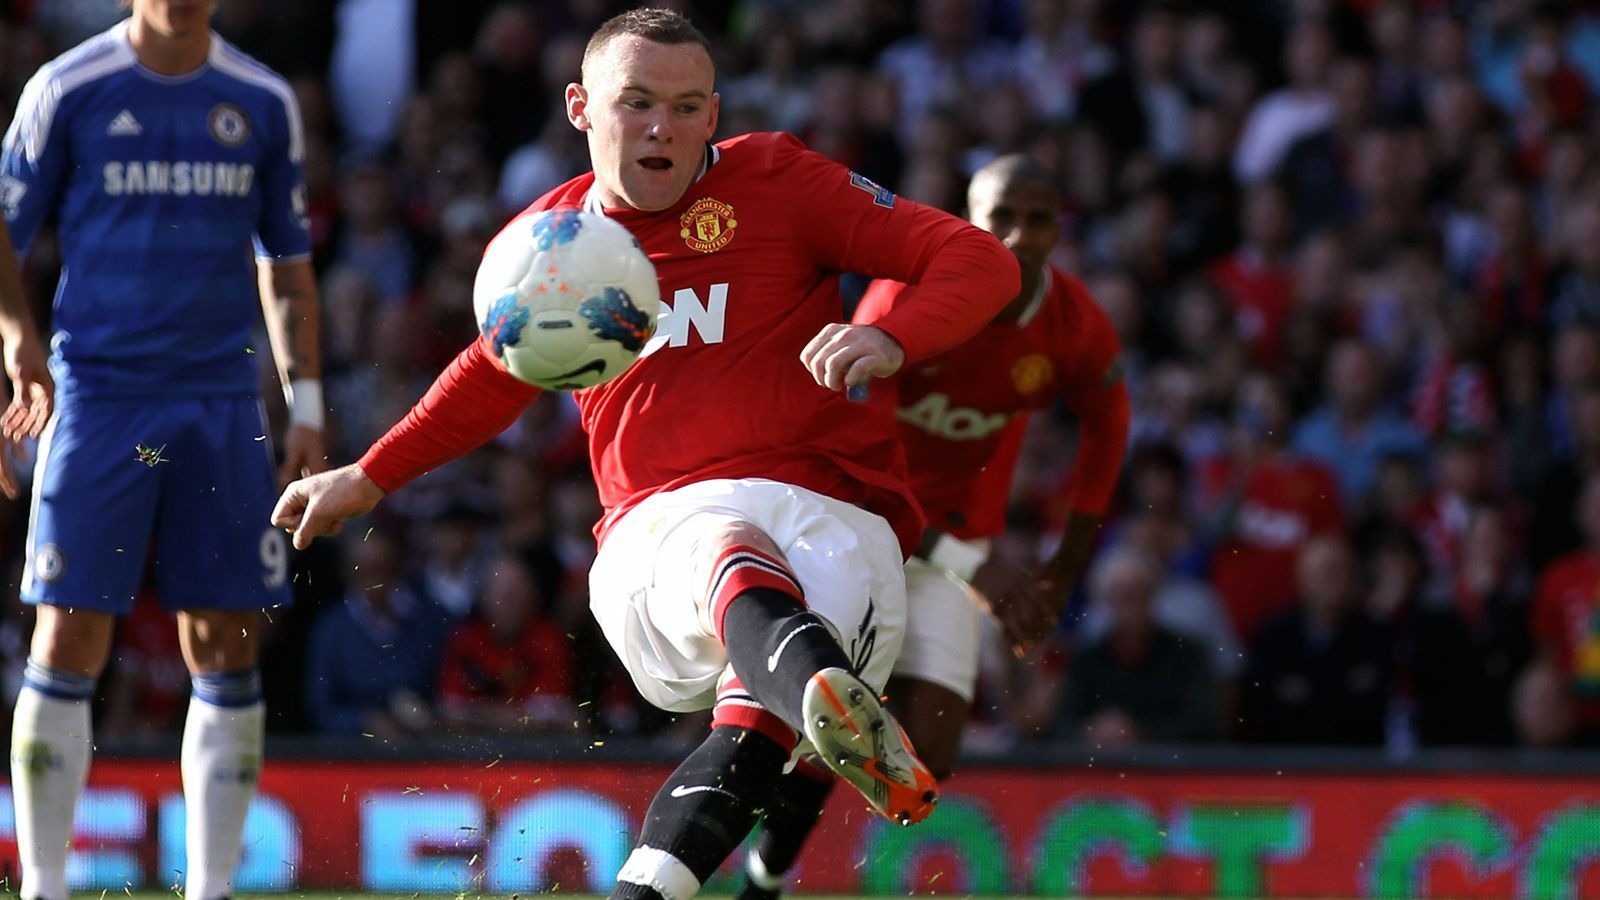 
                <strong>Wayne Rooney (Manchester United)</strong><br>
                Traf in fünf Spielen in Folge nach dem Saisonbeginn 2011/12
              